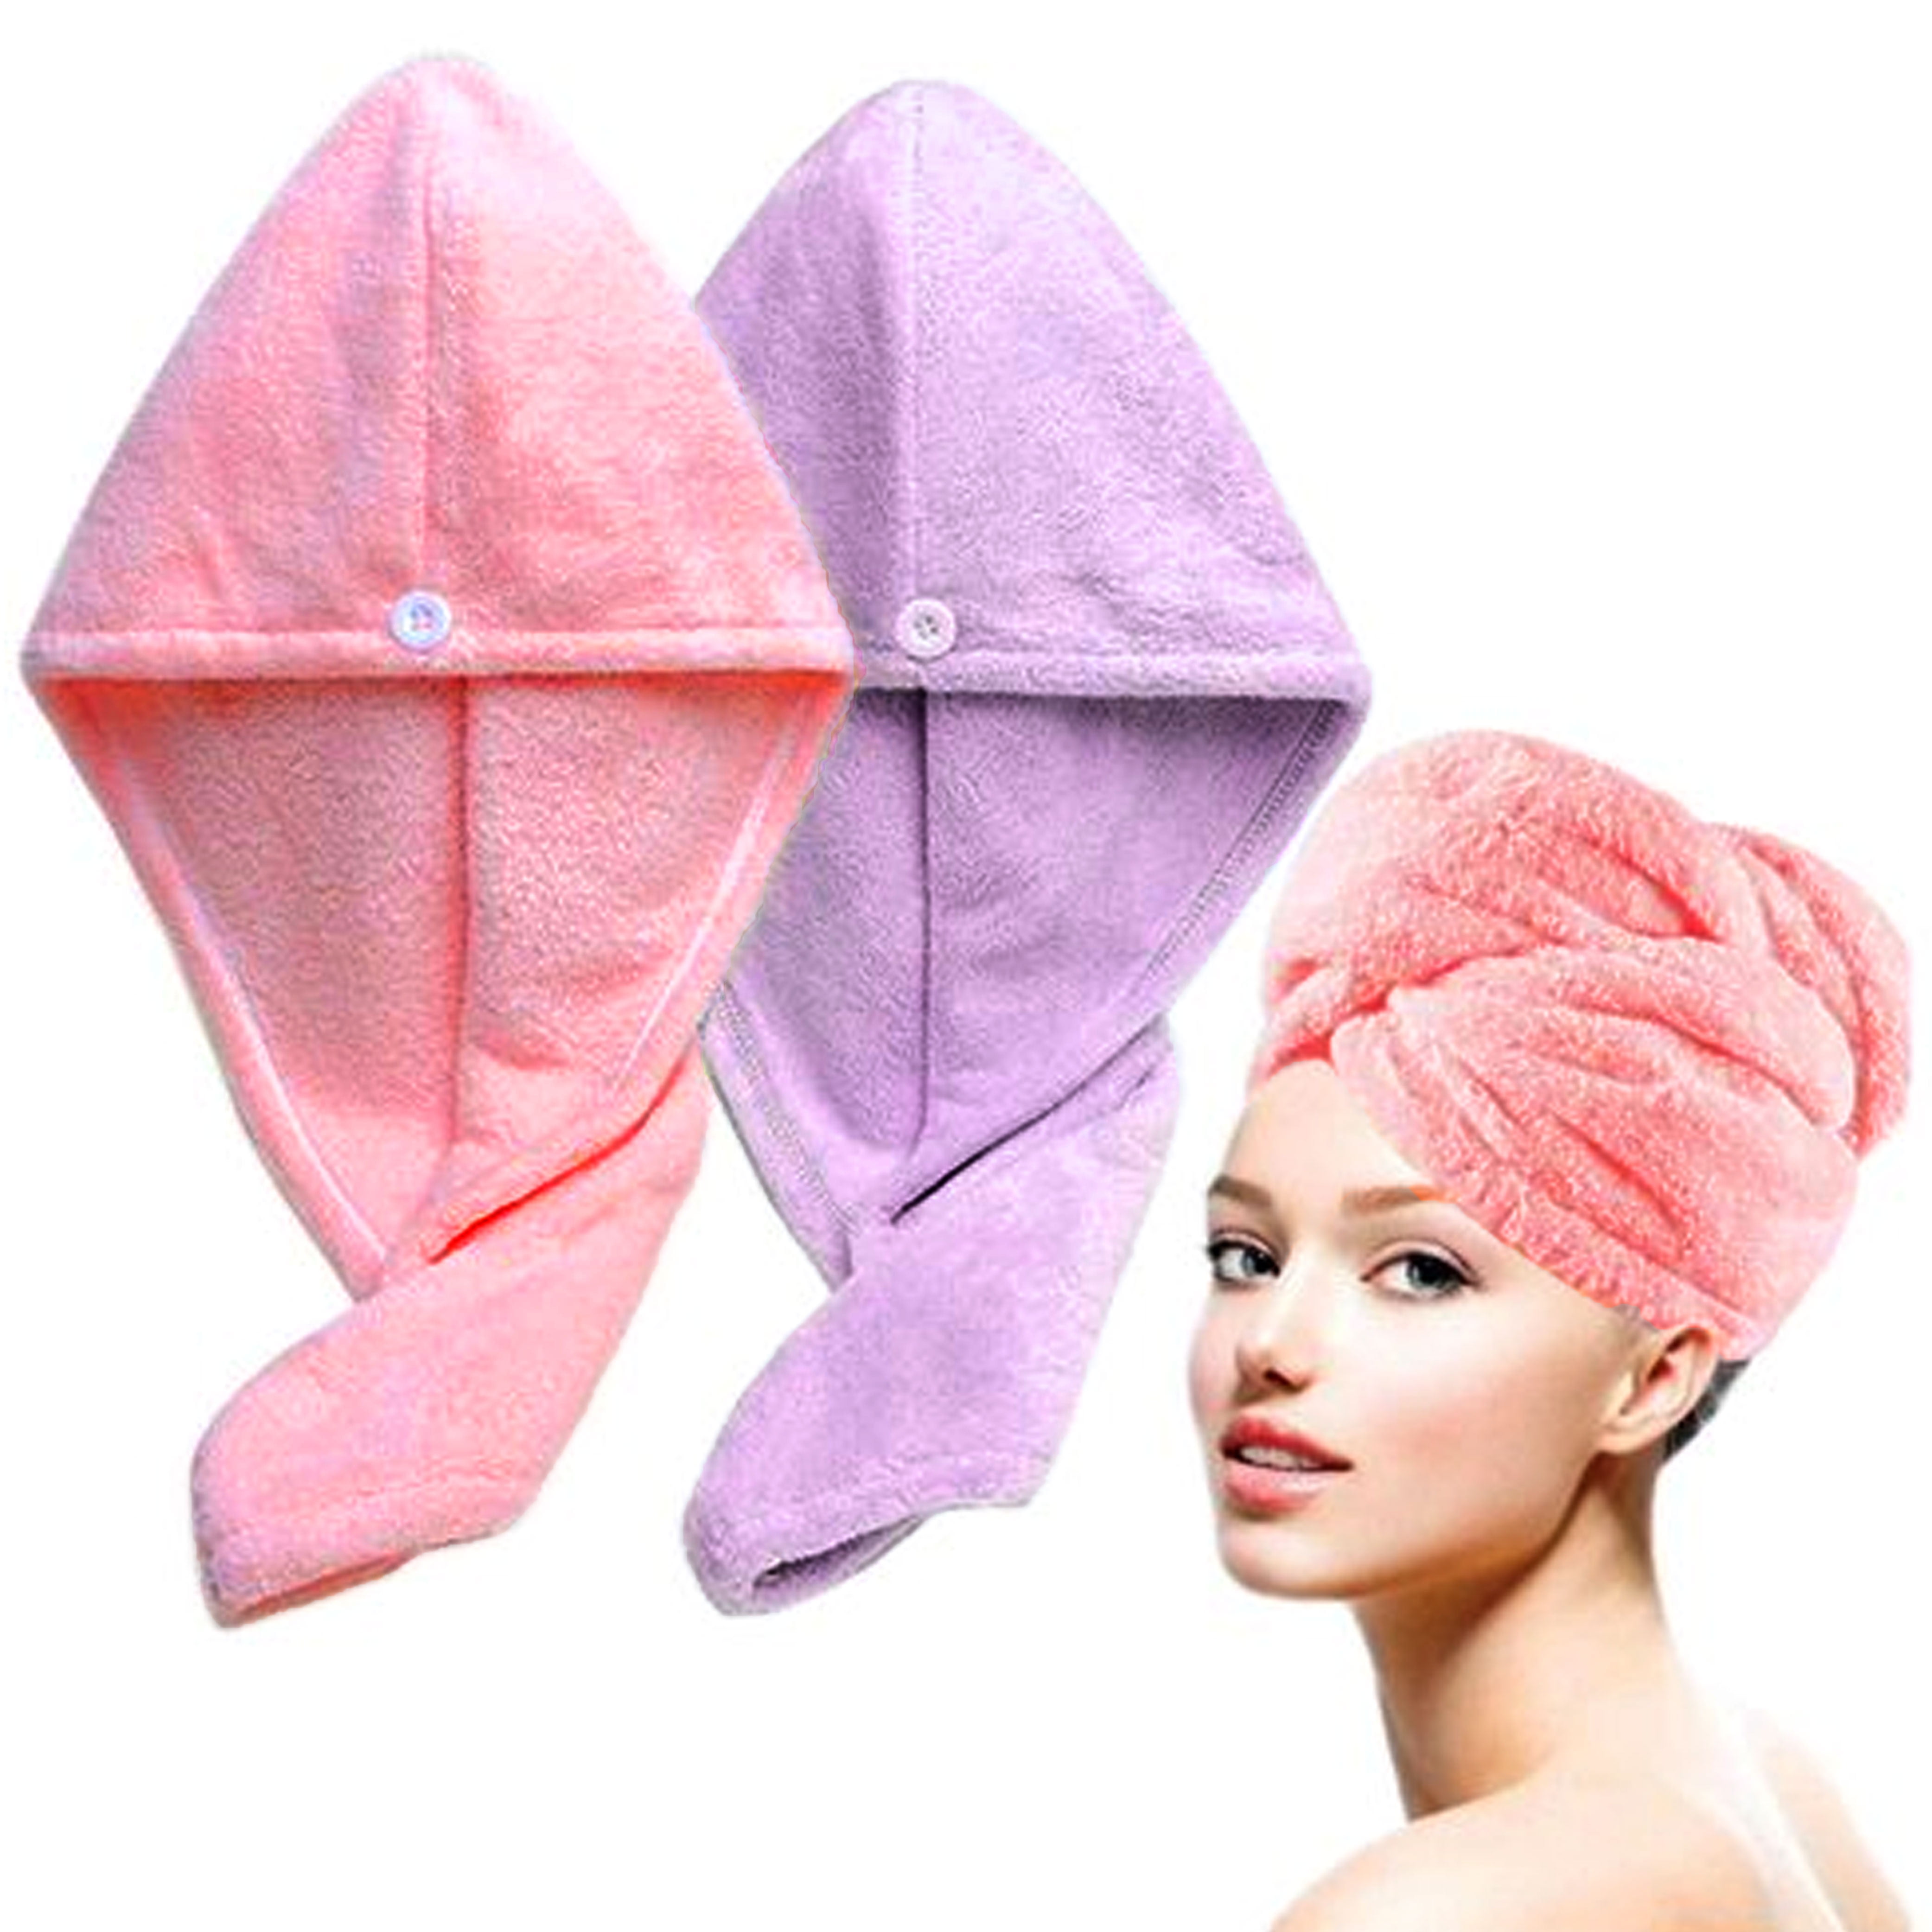 2 Hair Towel Turban Twist Wrap Microfiber Quick Dry Cotton Head Bath Shower  Cap 